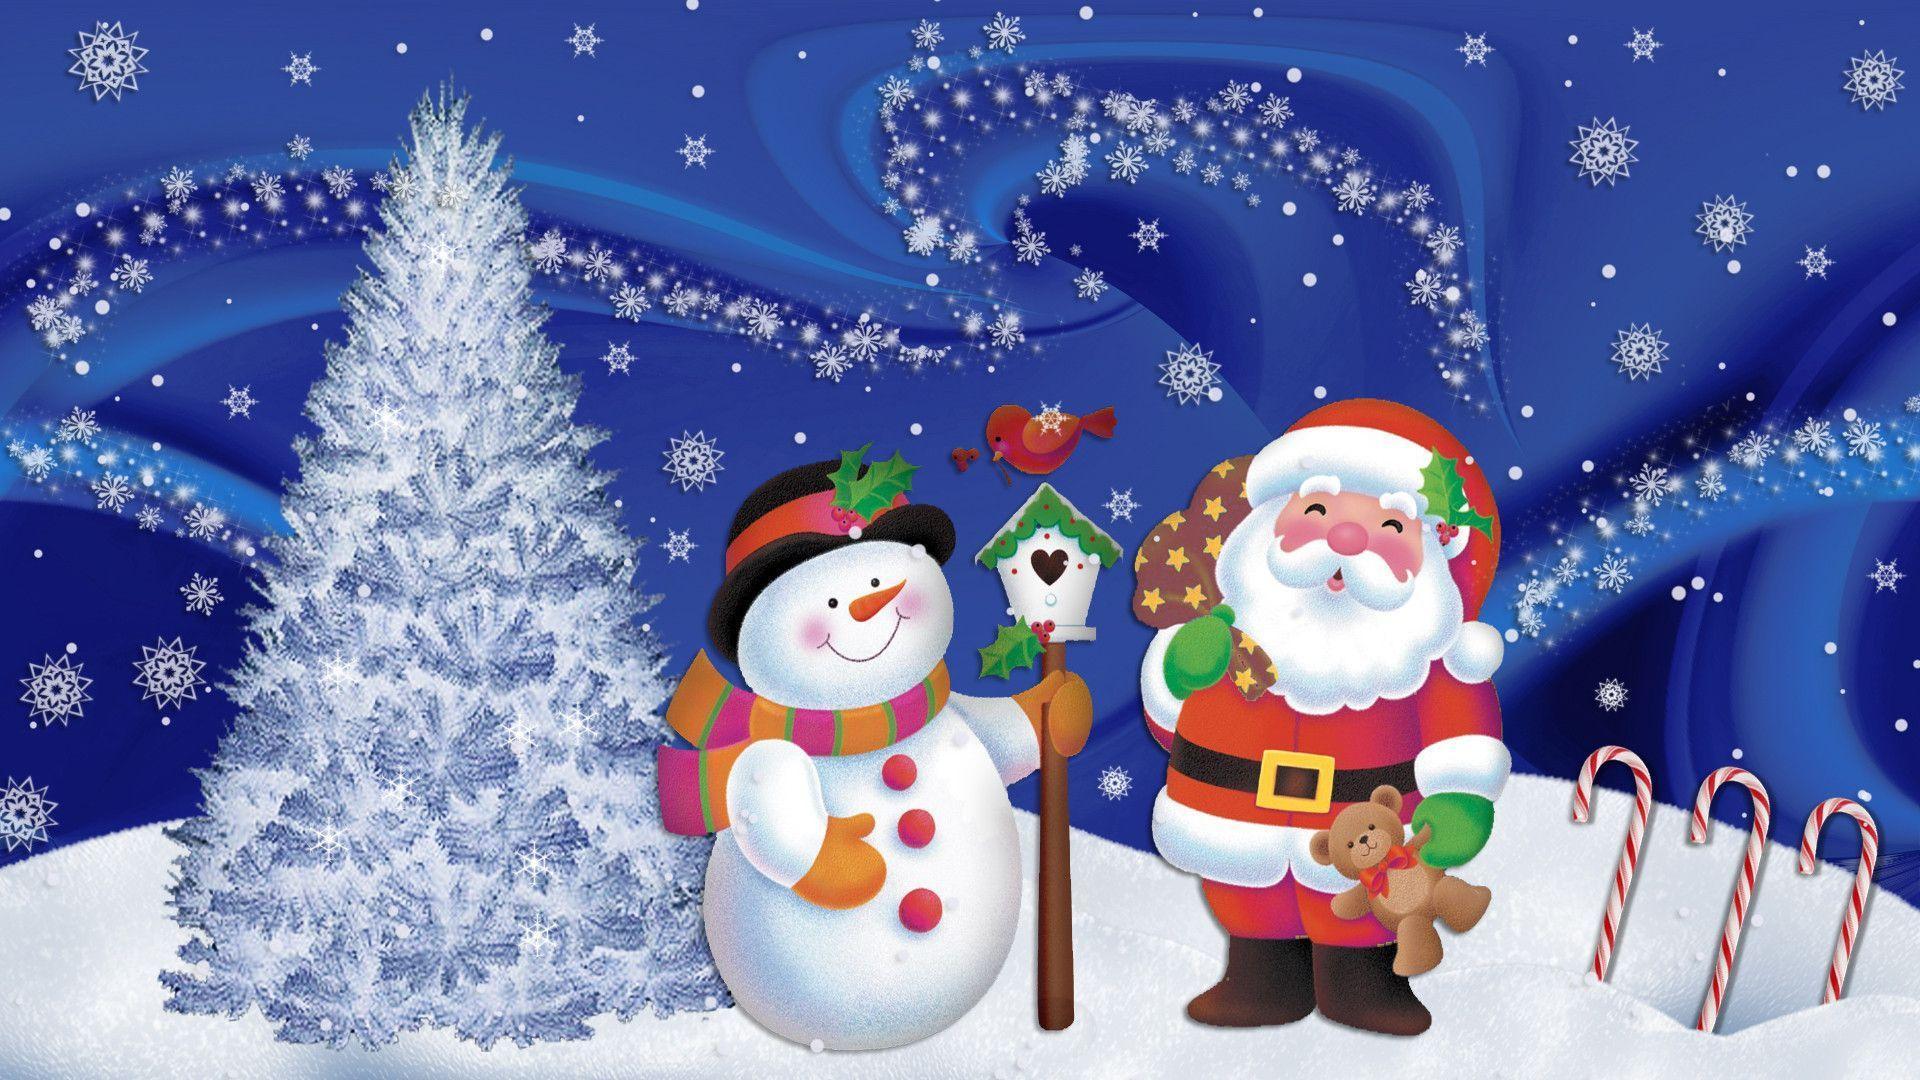 Xmas Stuff For > Merry Christmas Snowman Wallpaper